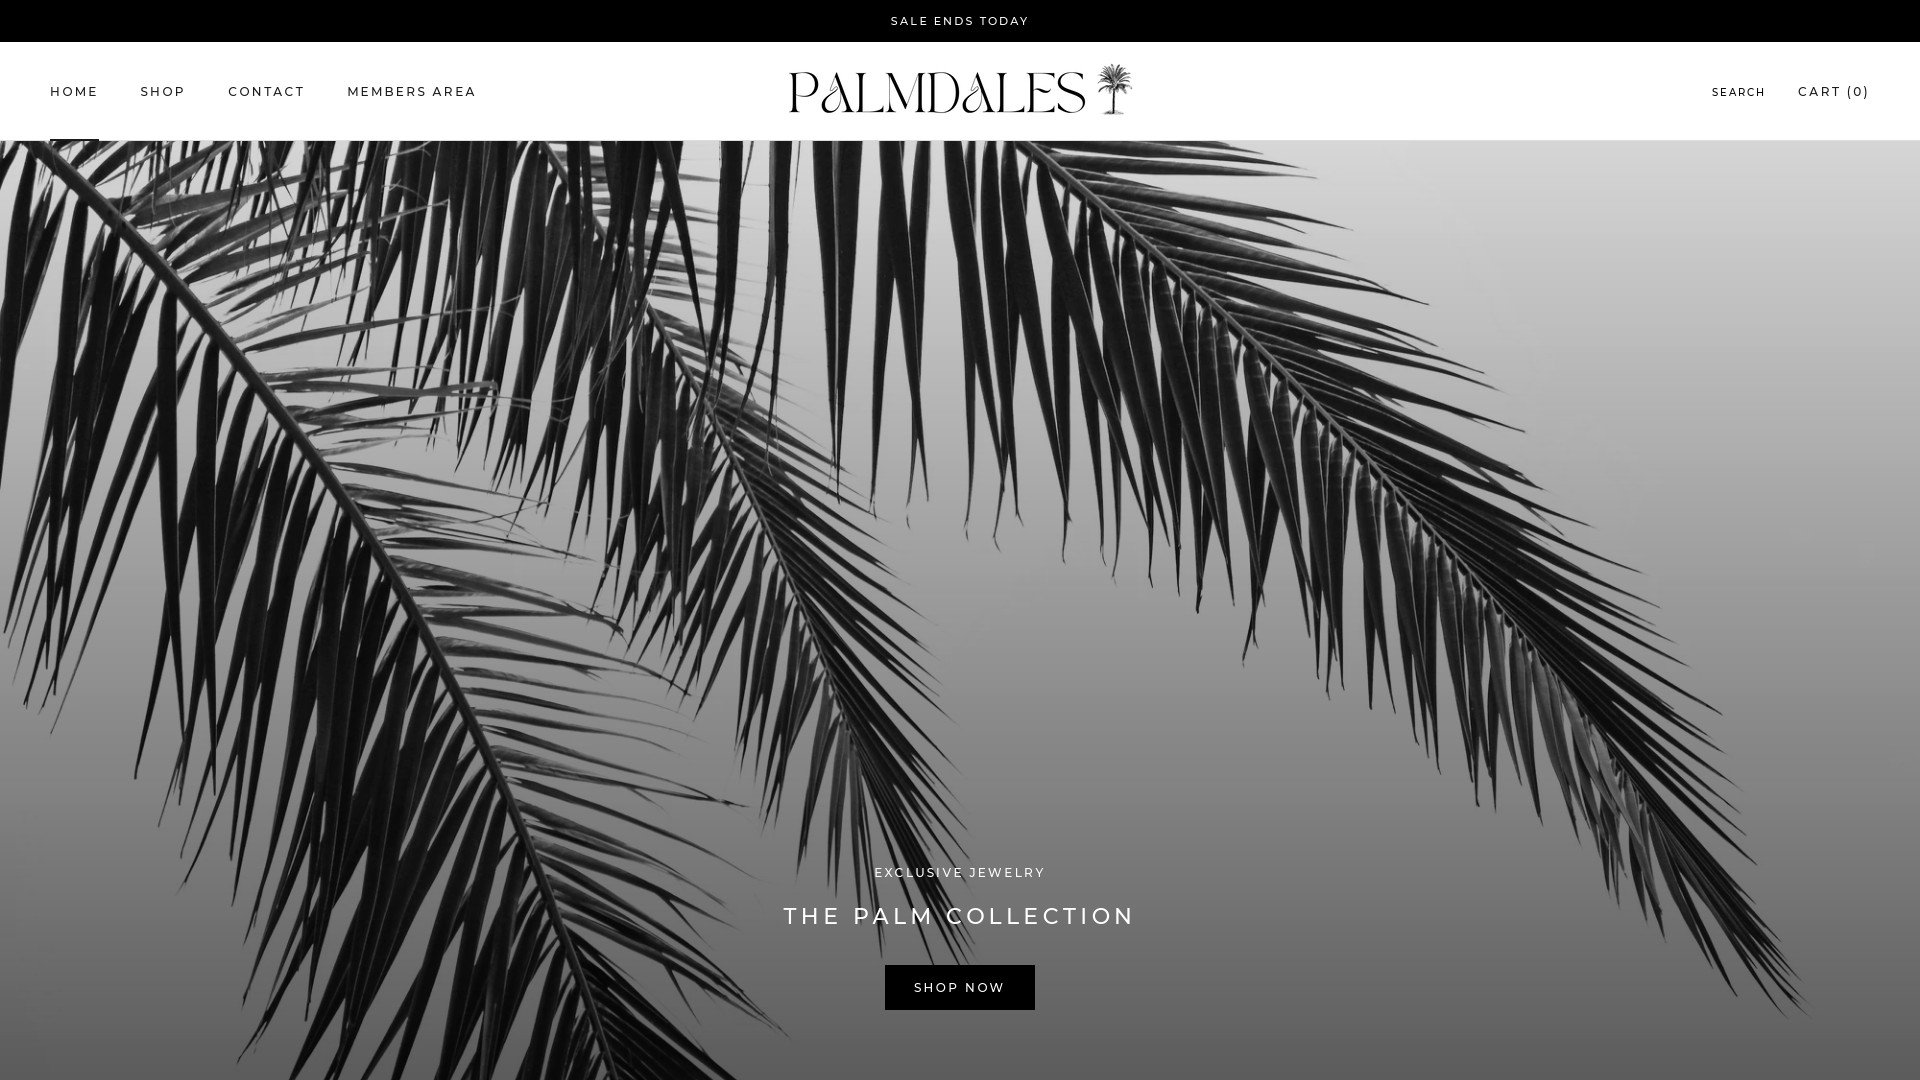 Palmdales at palmdales.com